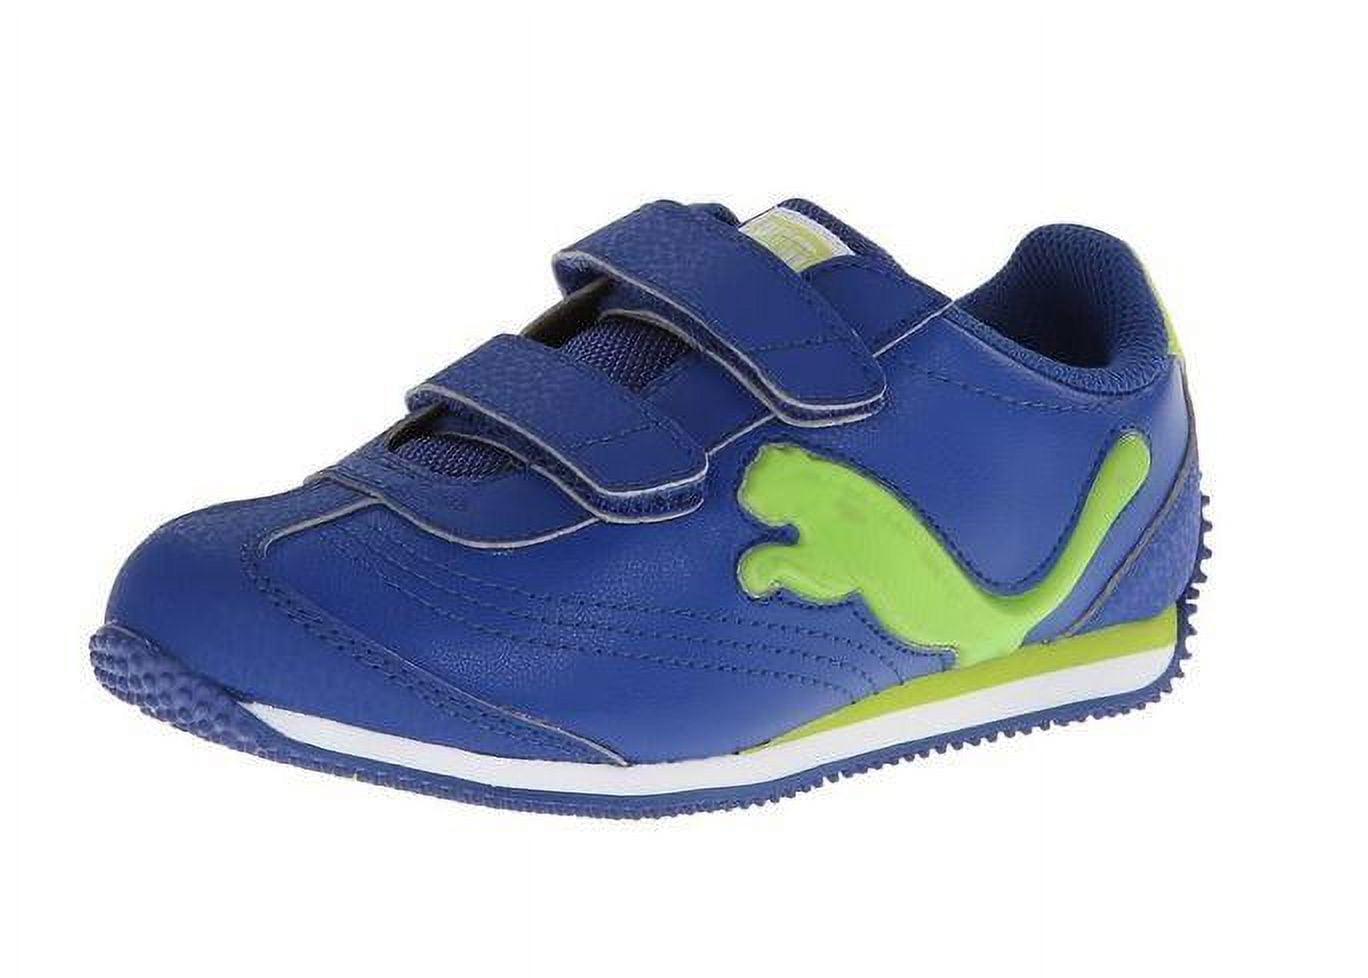 Puma Infant/Toddler Speeder Illuminescent V Shoes Blue Light Up Gray - & Sneaker